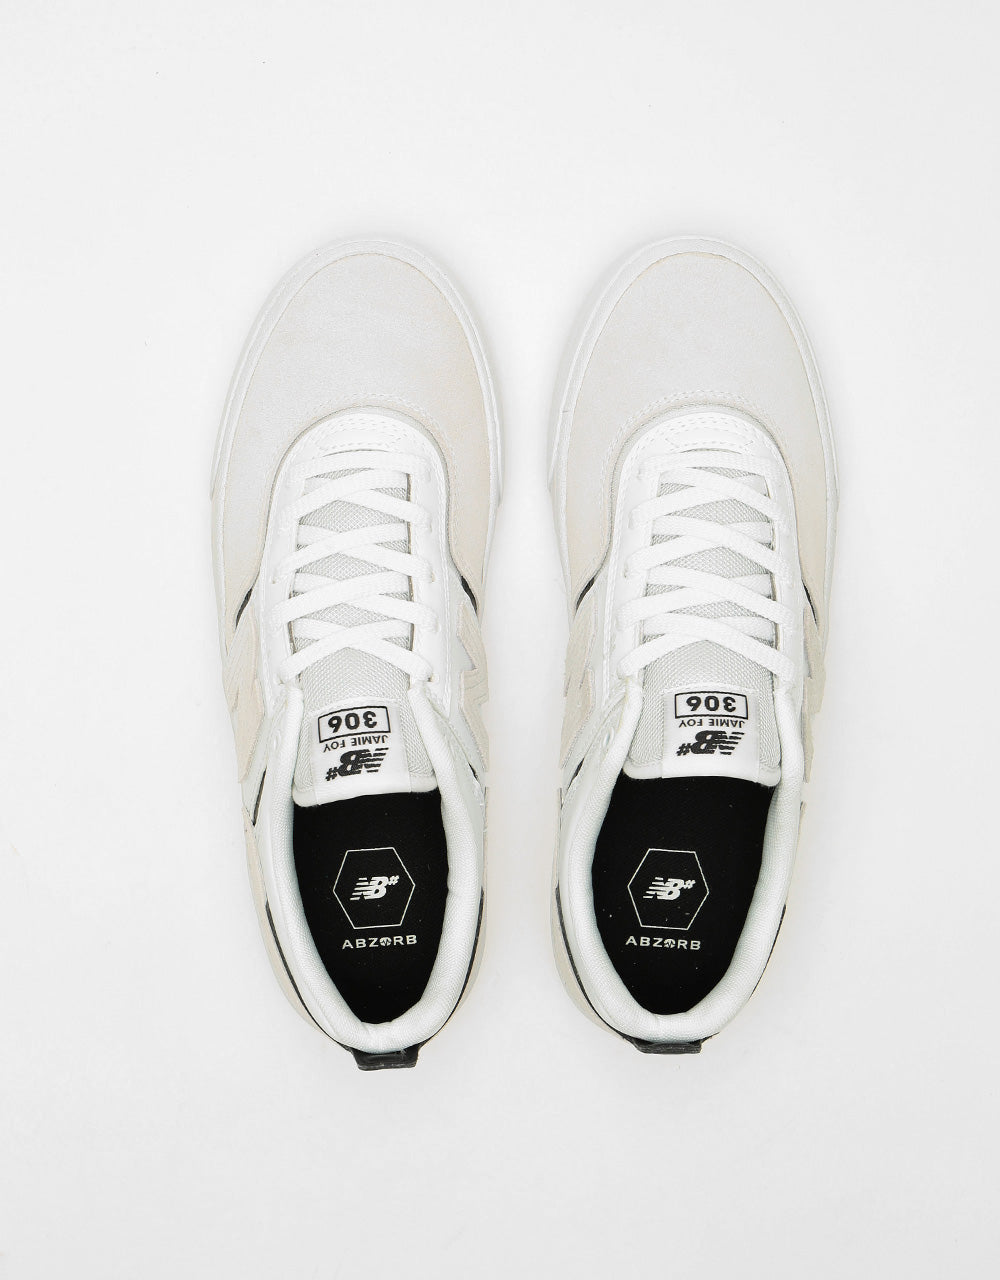 New Balance Numeric 306 Skate Shoes - White/Black/White